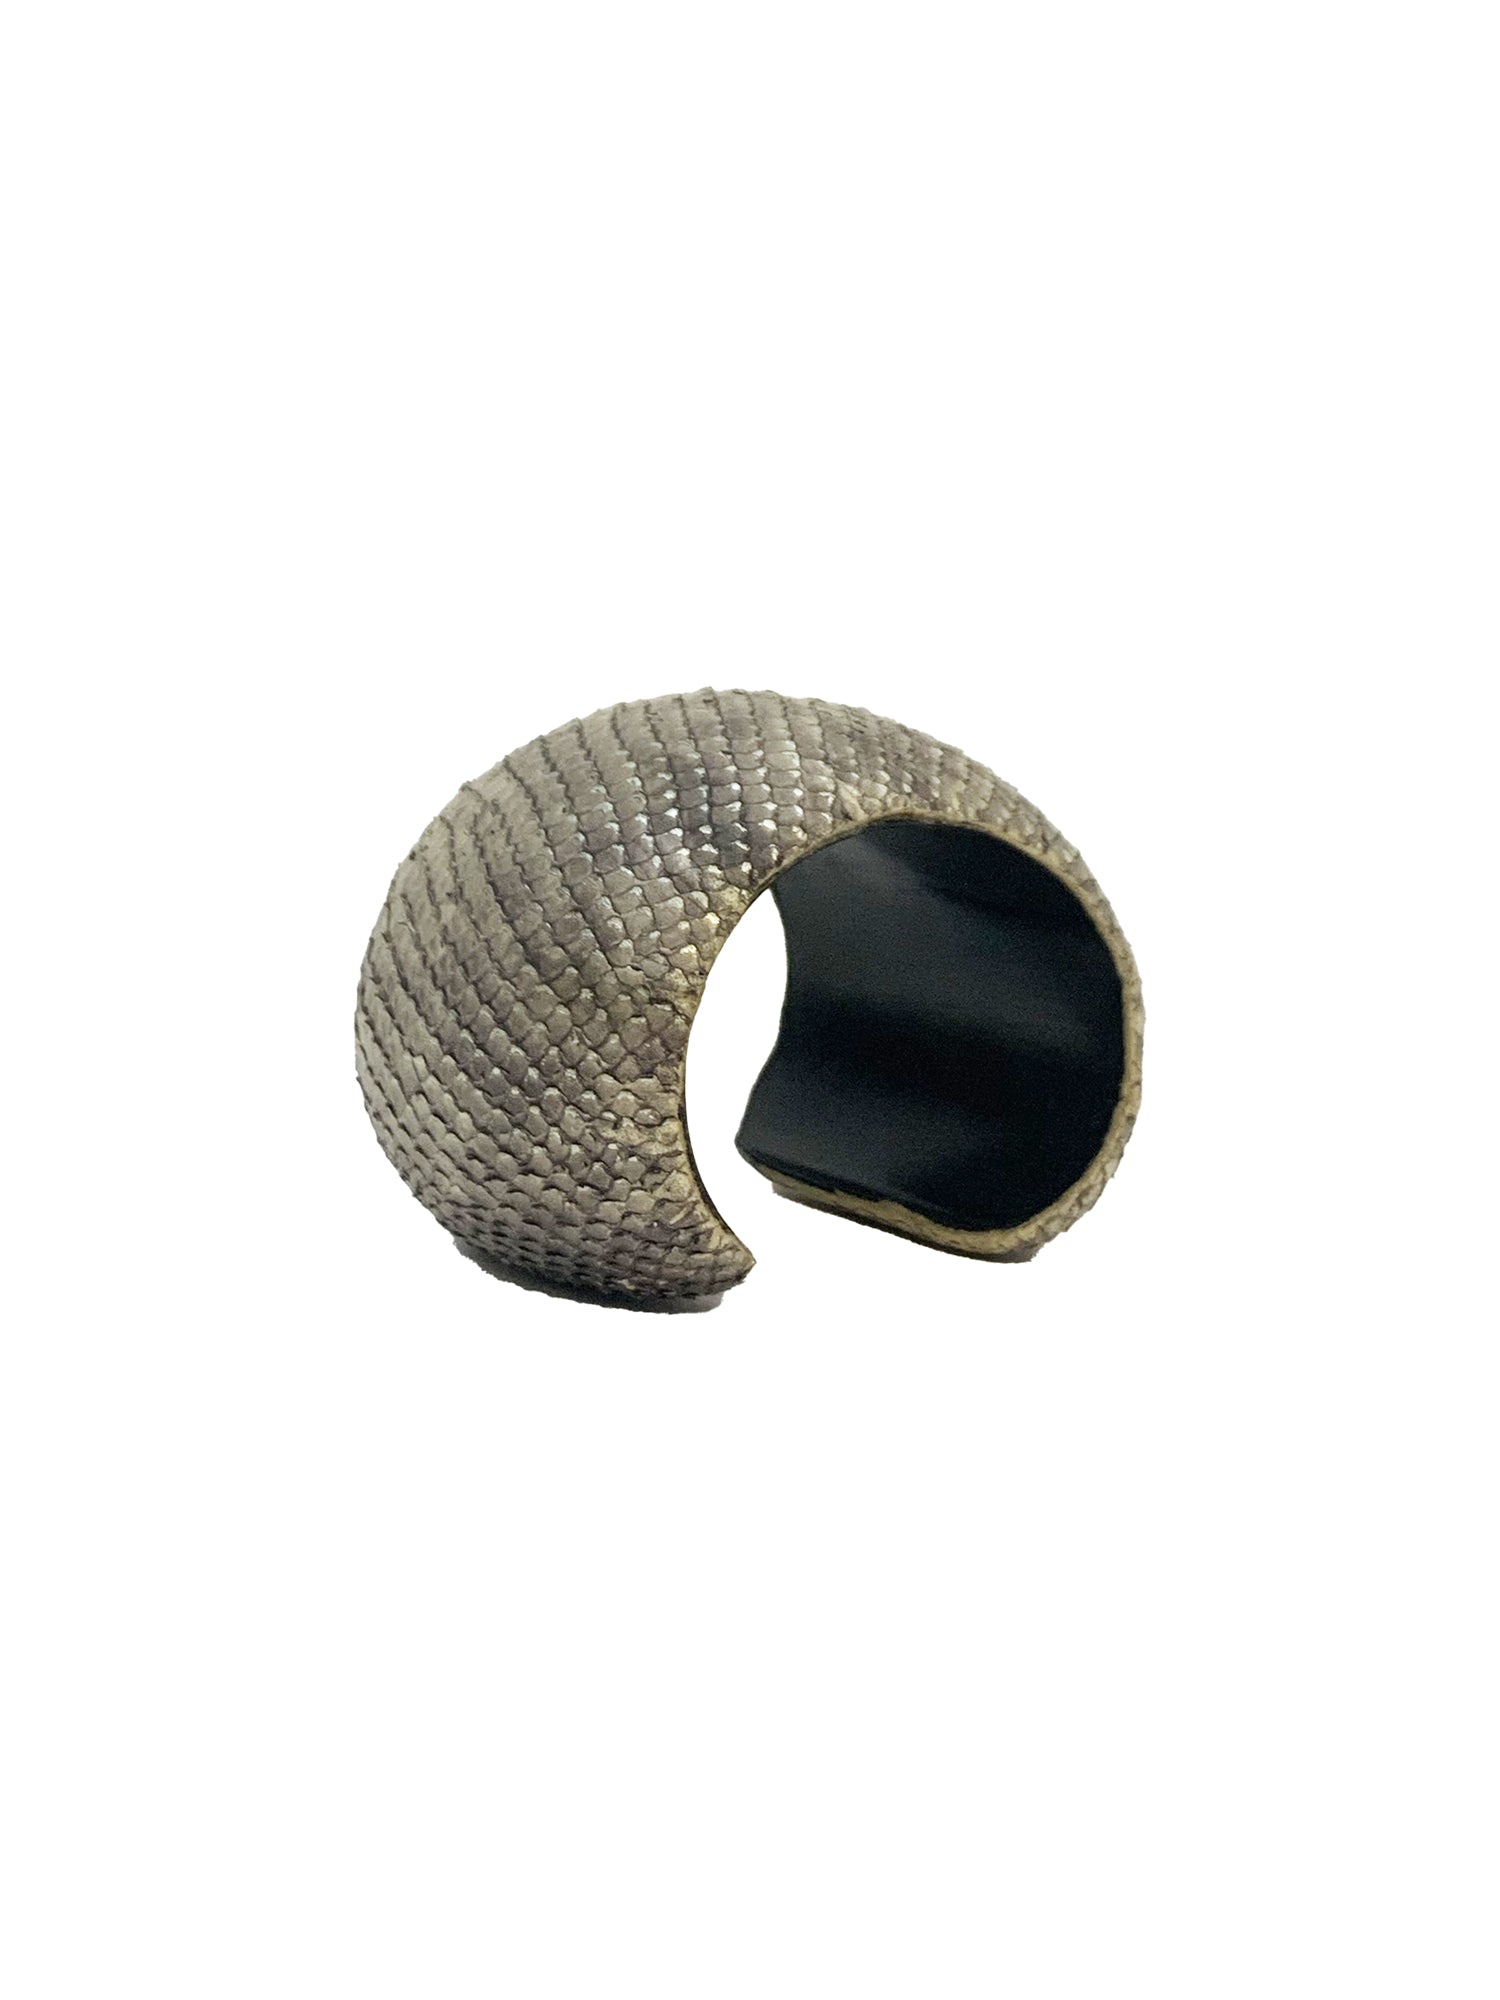 Leather & Wood Bombe Cuff Bracelet - Taupe